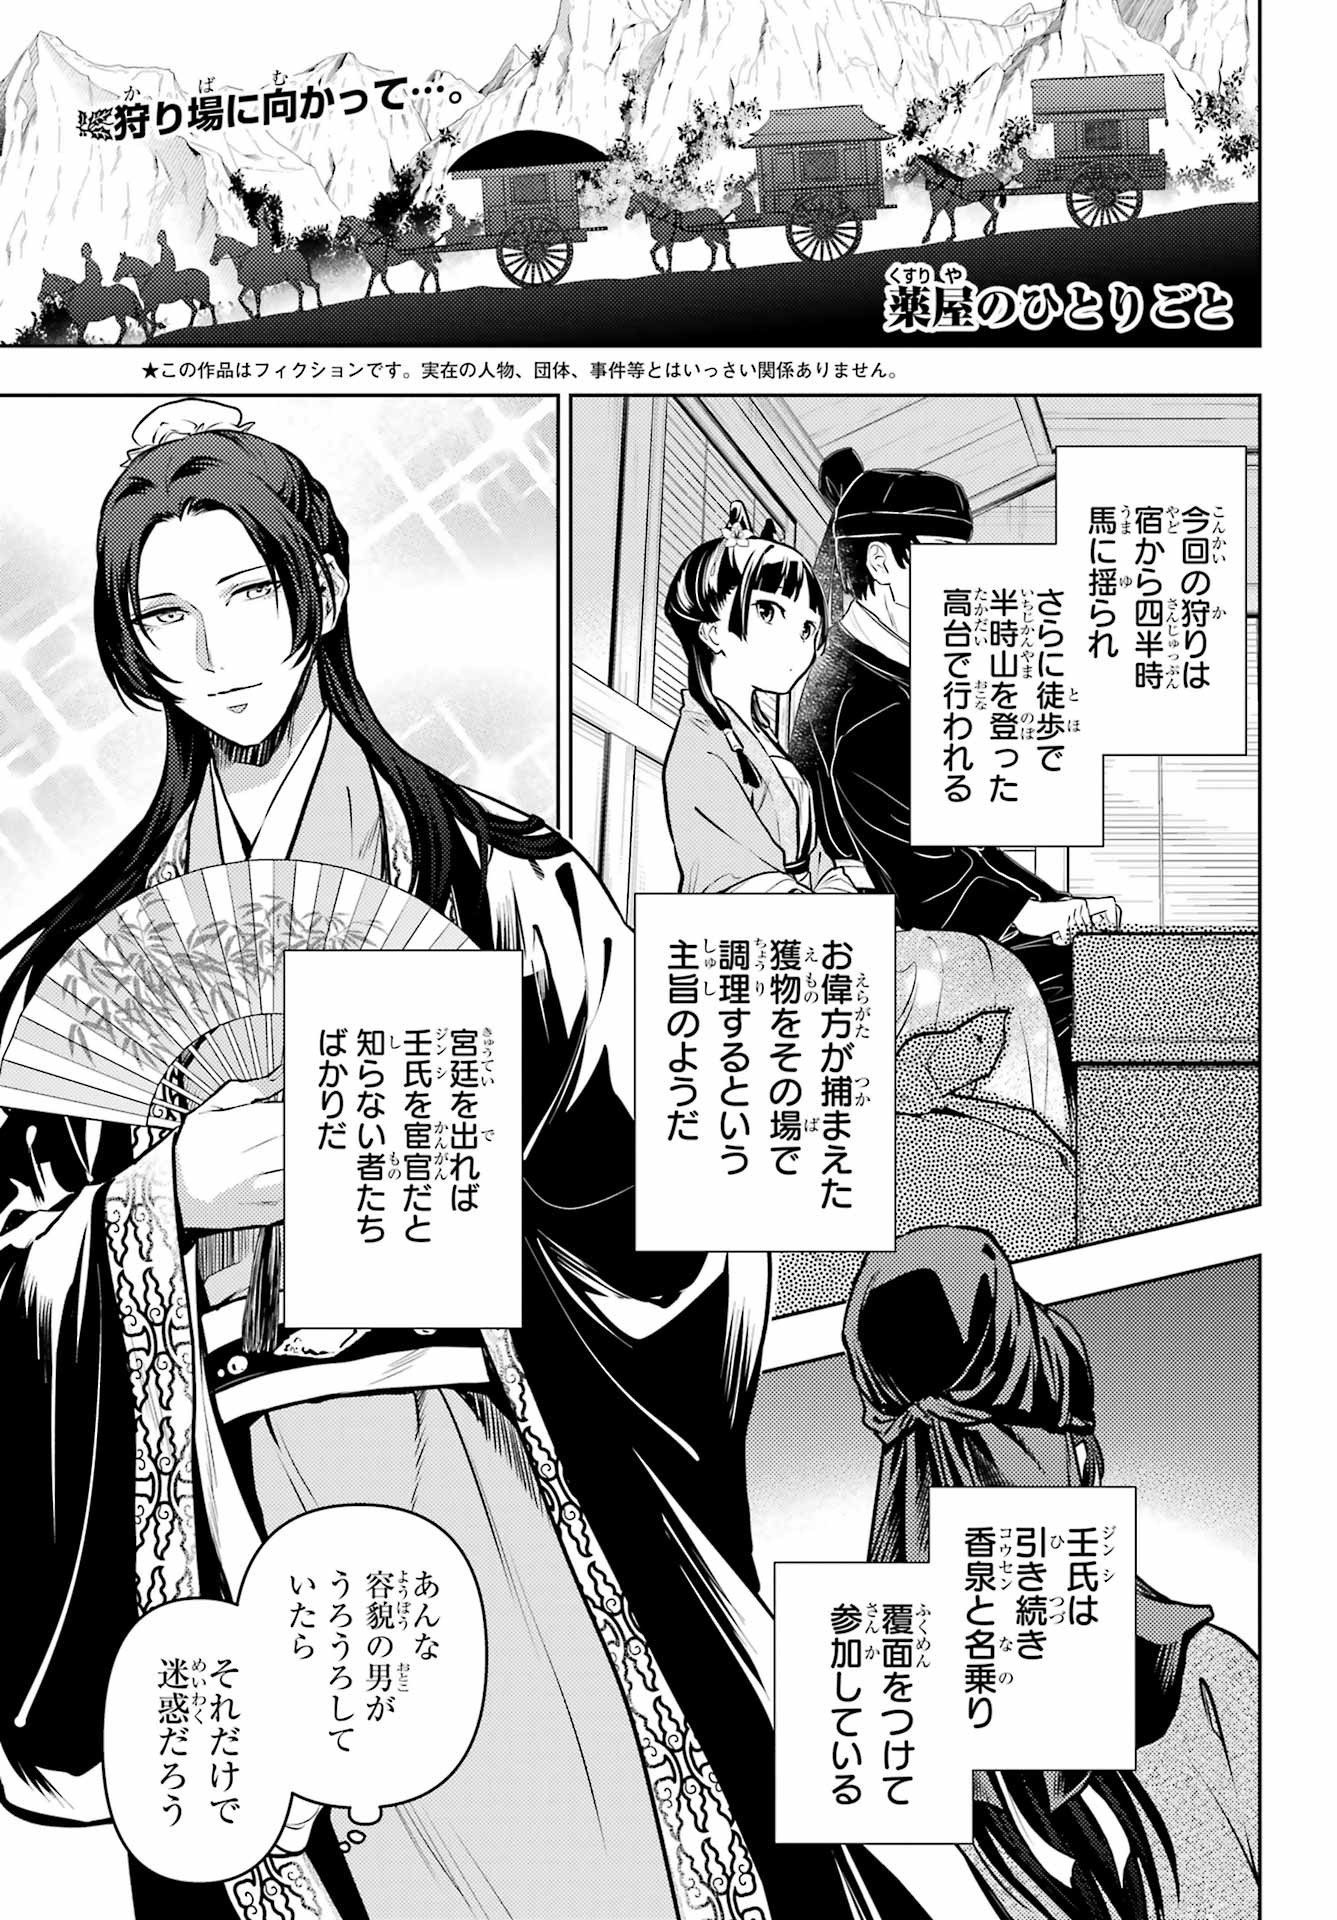 Kusuriya no Hitorigoto - Chapter 61 - Page 1